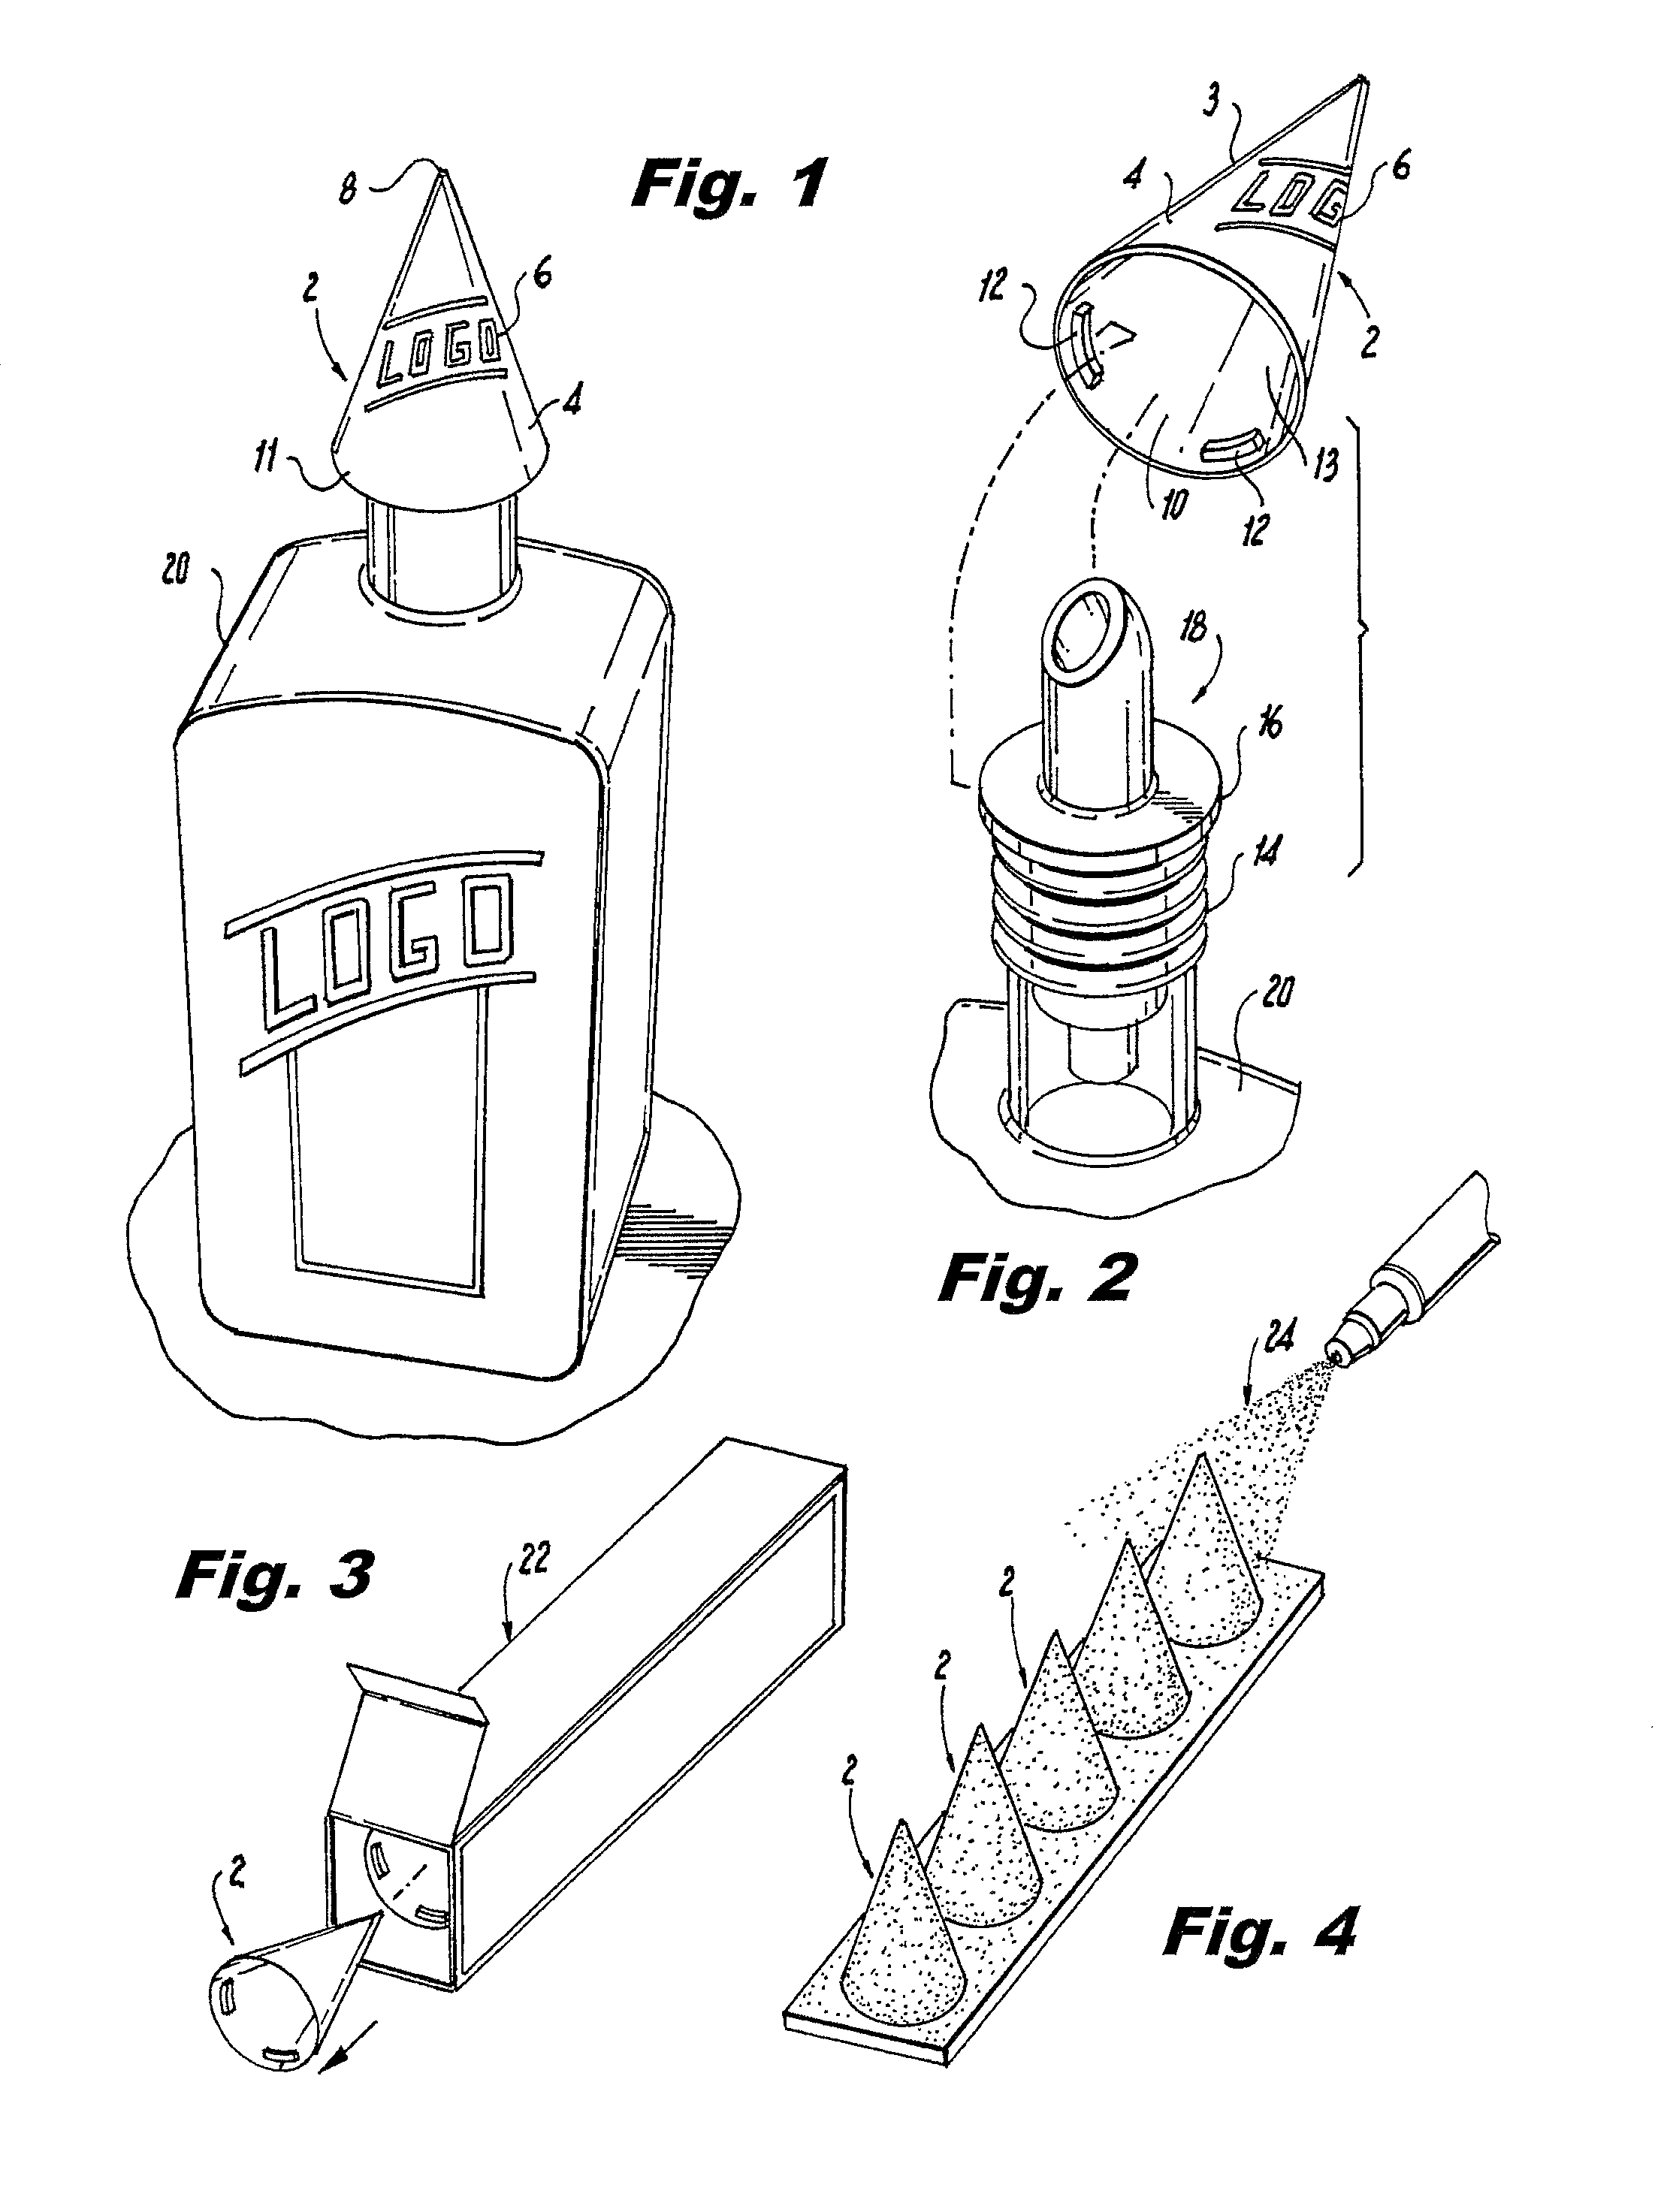 Disposable pest entry cover for open bottles